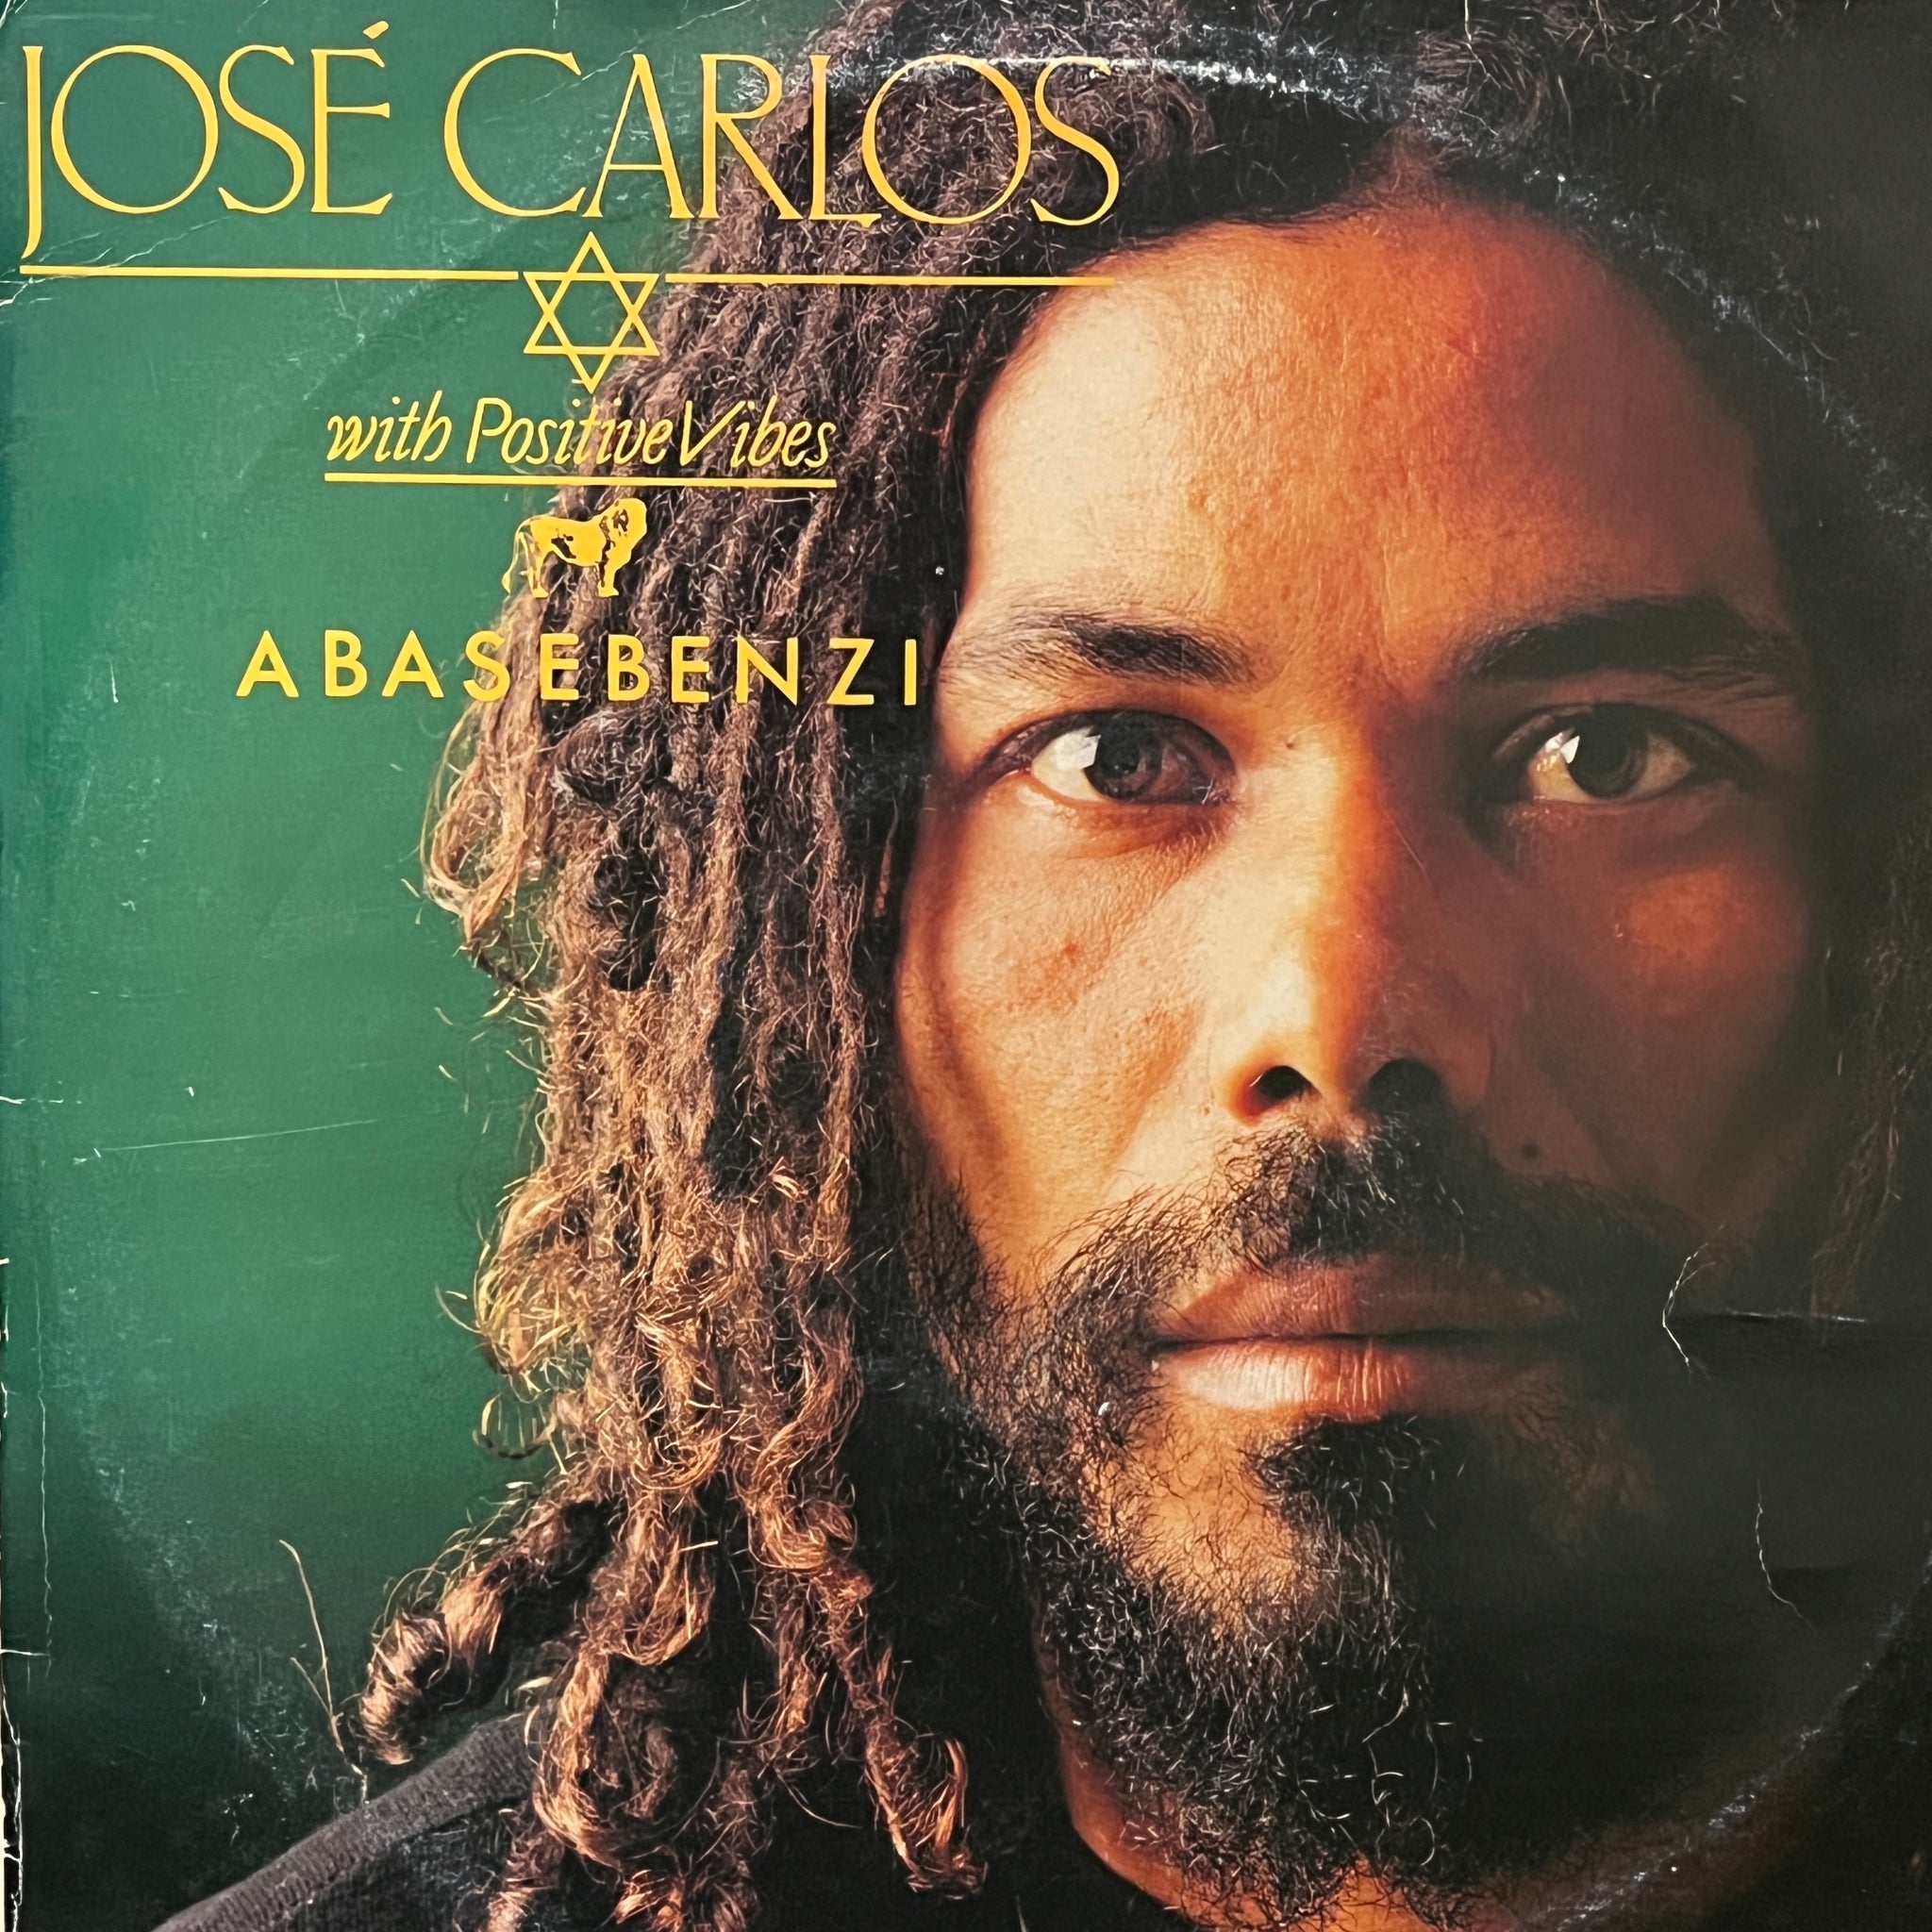 José Carlos with Positive Vibes – Abasebenzi